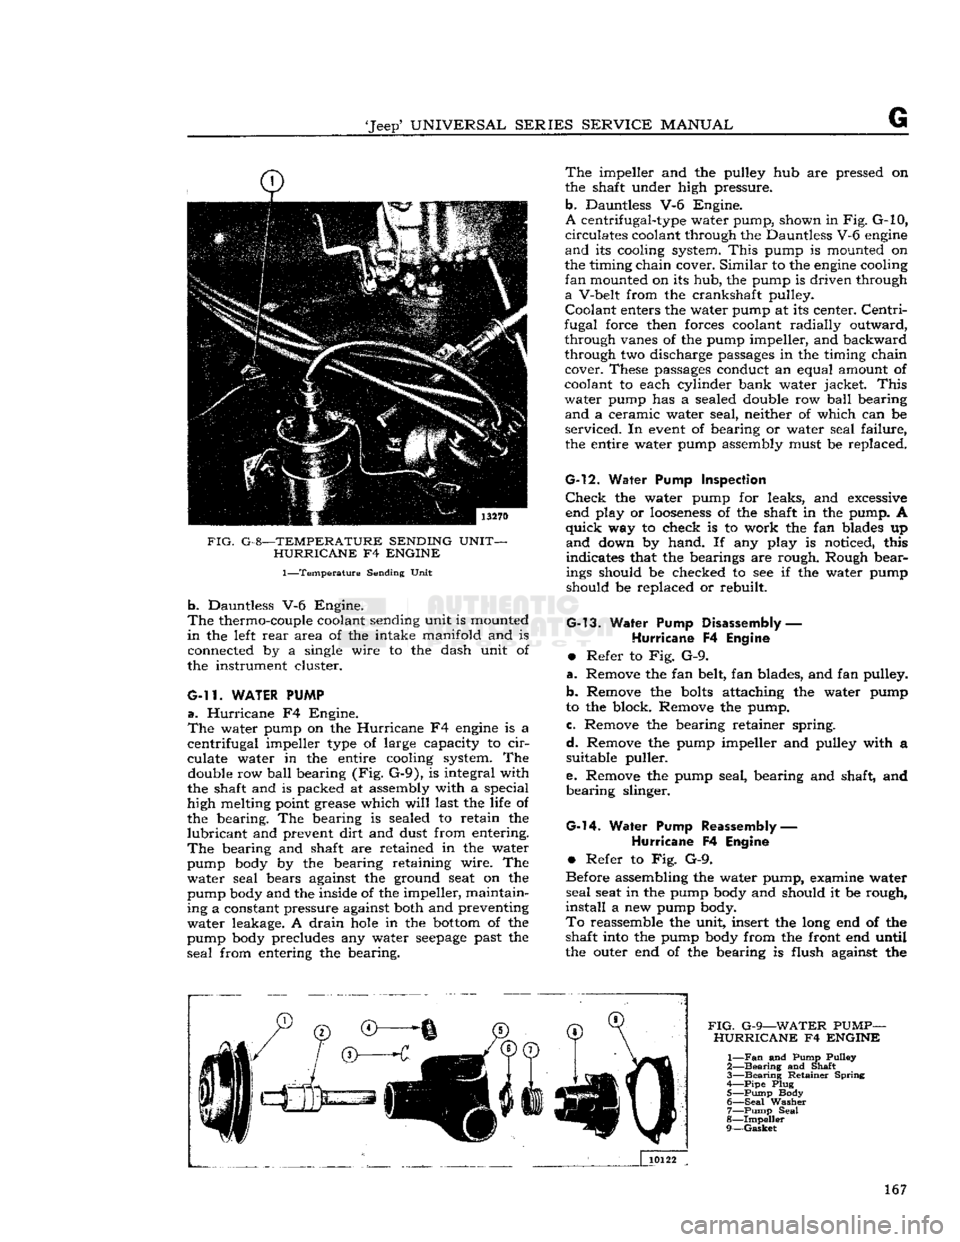 JEEP DJ 1953  Service Manual 
Jeep*
 UNIVERSAL
 SERIES
 SERVICE
 MANUAL 

FIG.
 G-8—TEMPERATURE SENDING UNIT- HURRICANE
 F4
 ENGINE 
 1—Temperature
 Sending Unit 

b.
 Dauntless V-6 Engine. 

The
 thermo-couple coolant sendi